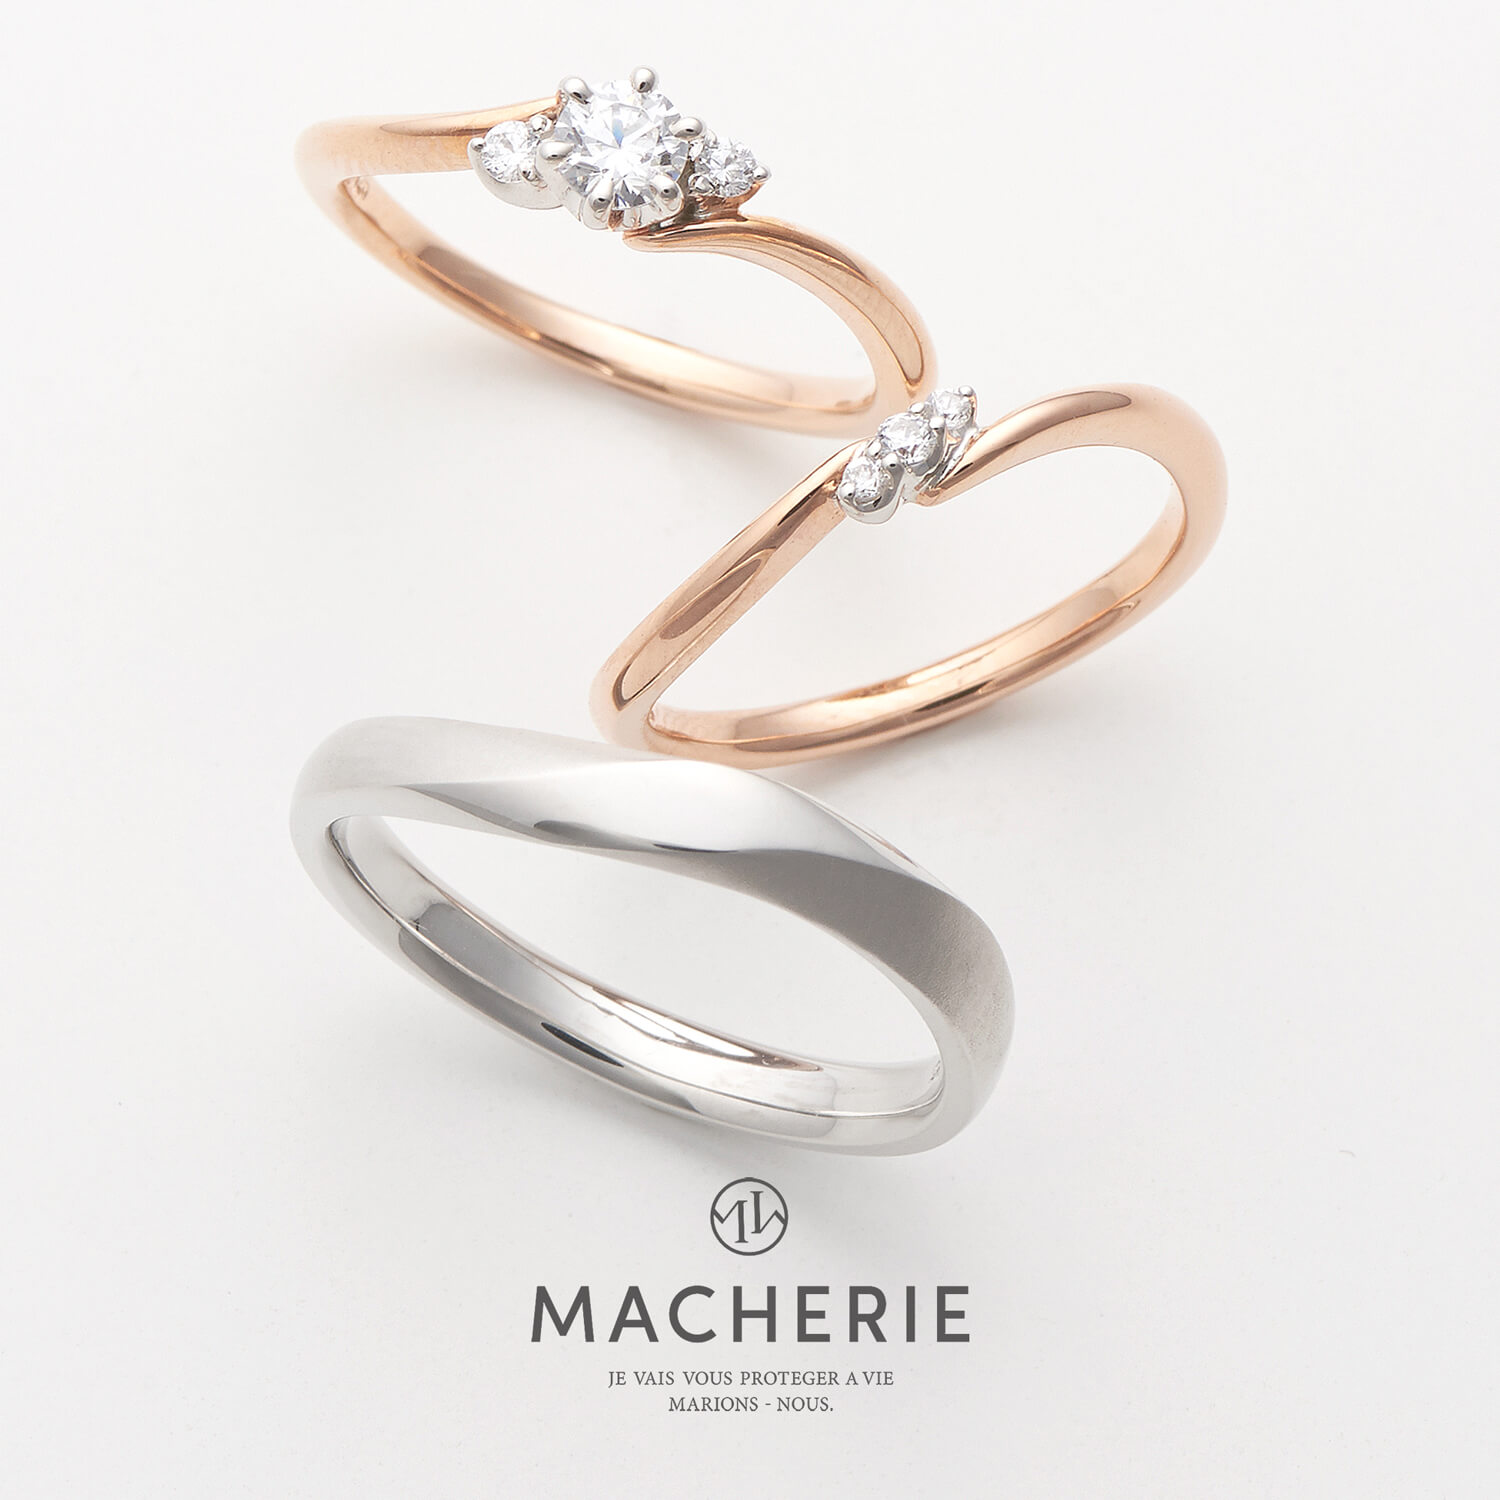 MACHERIEマシェリの婚約指輪と結婚指輪bouquetブーケ